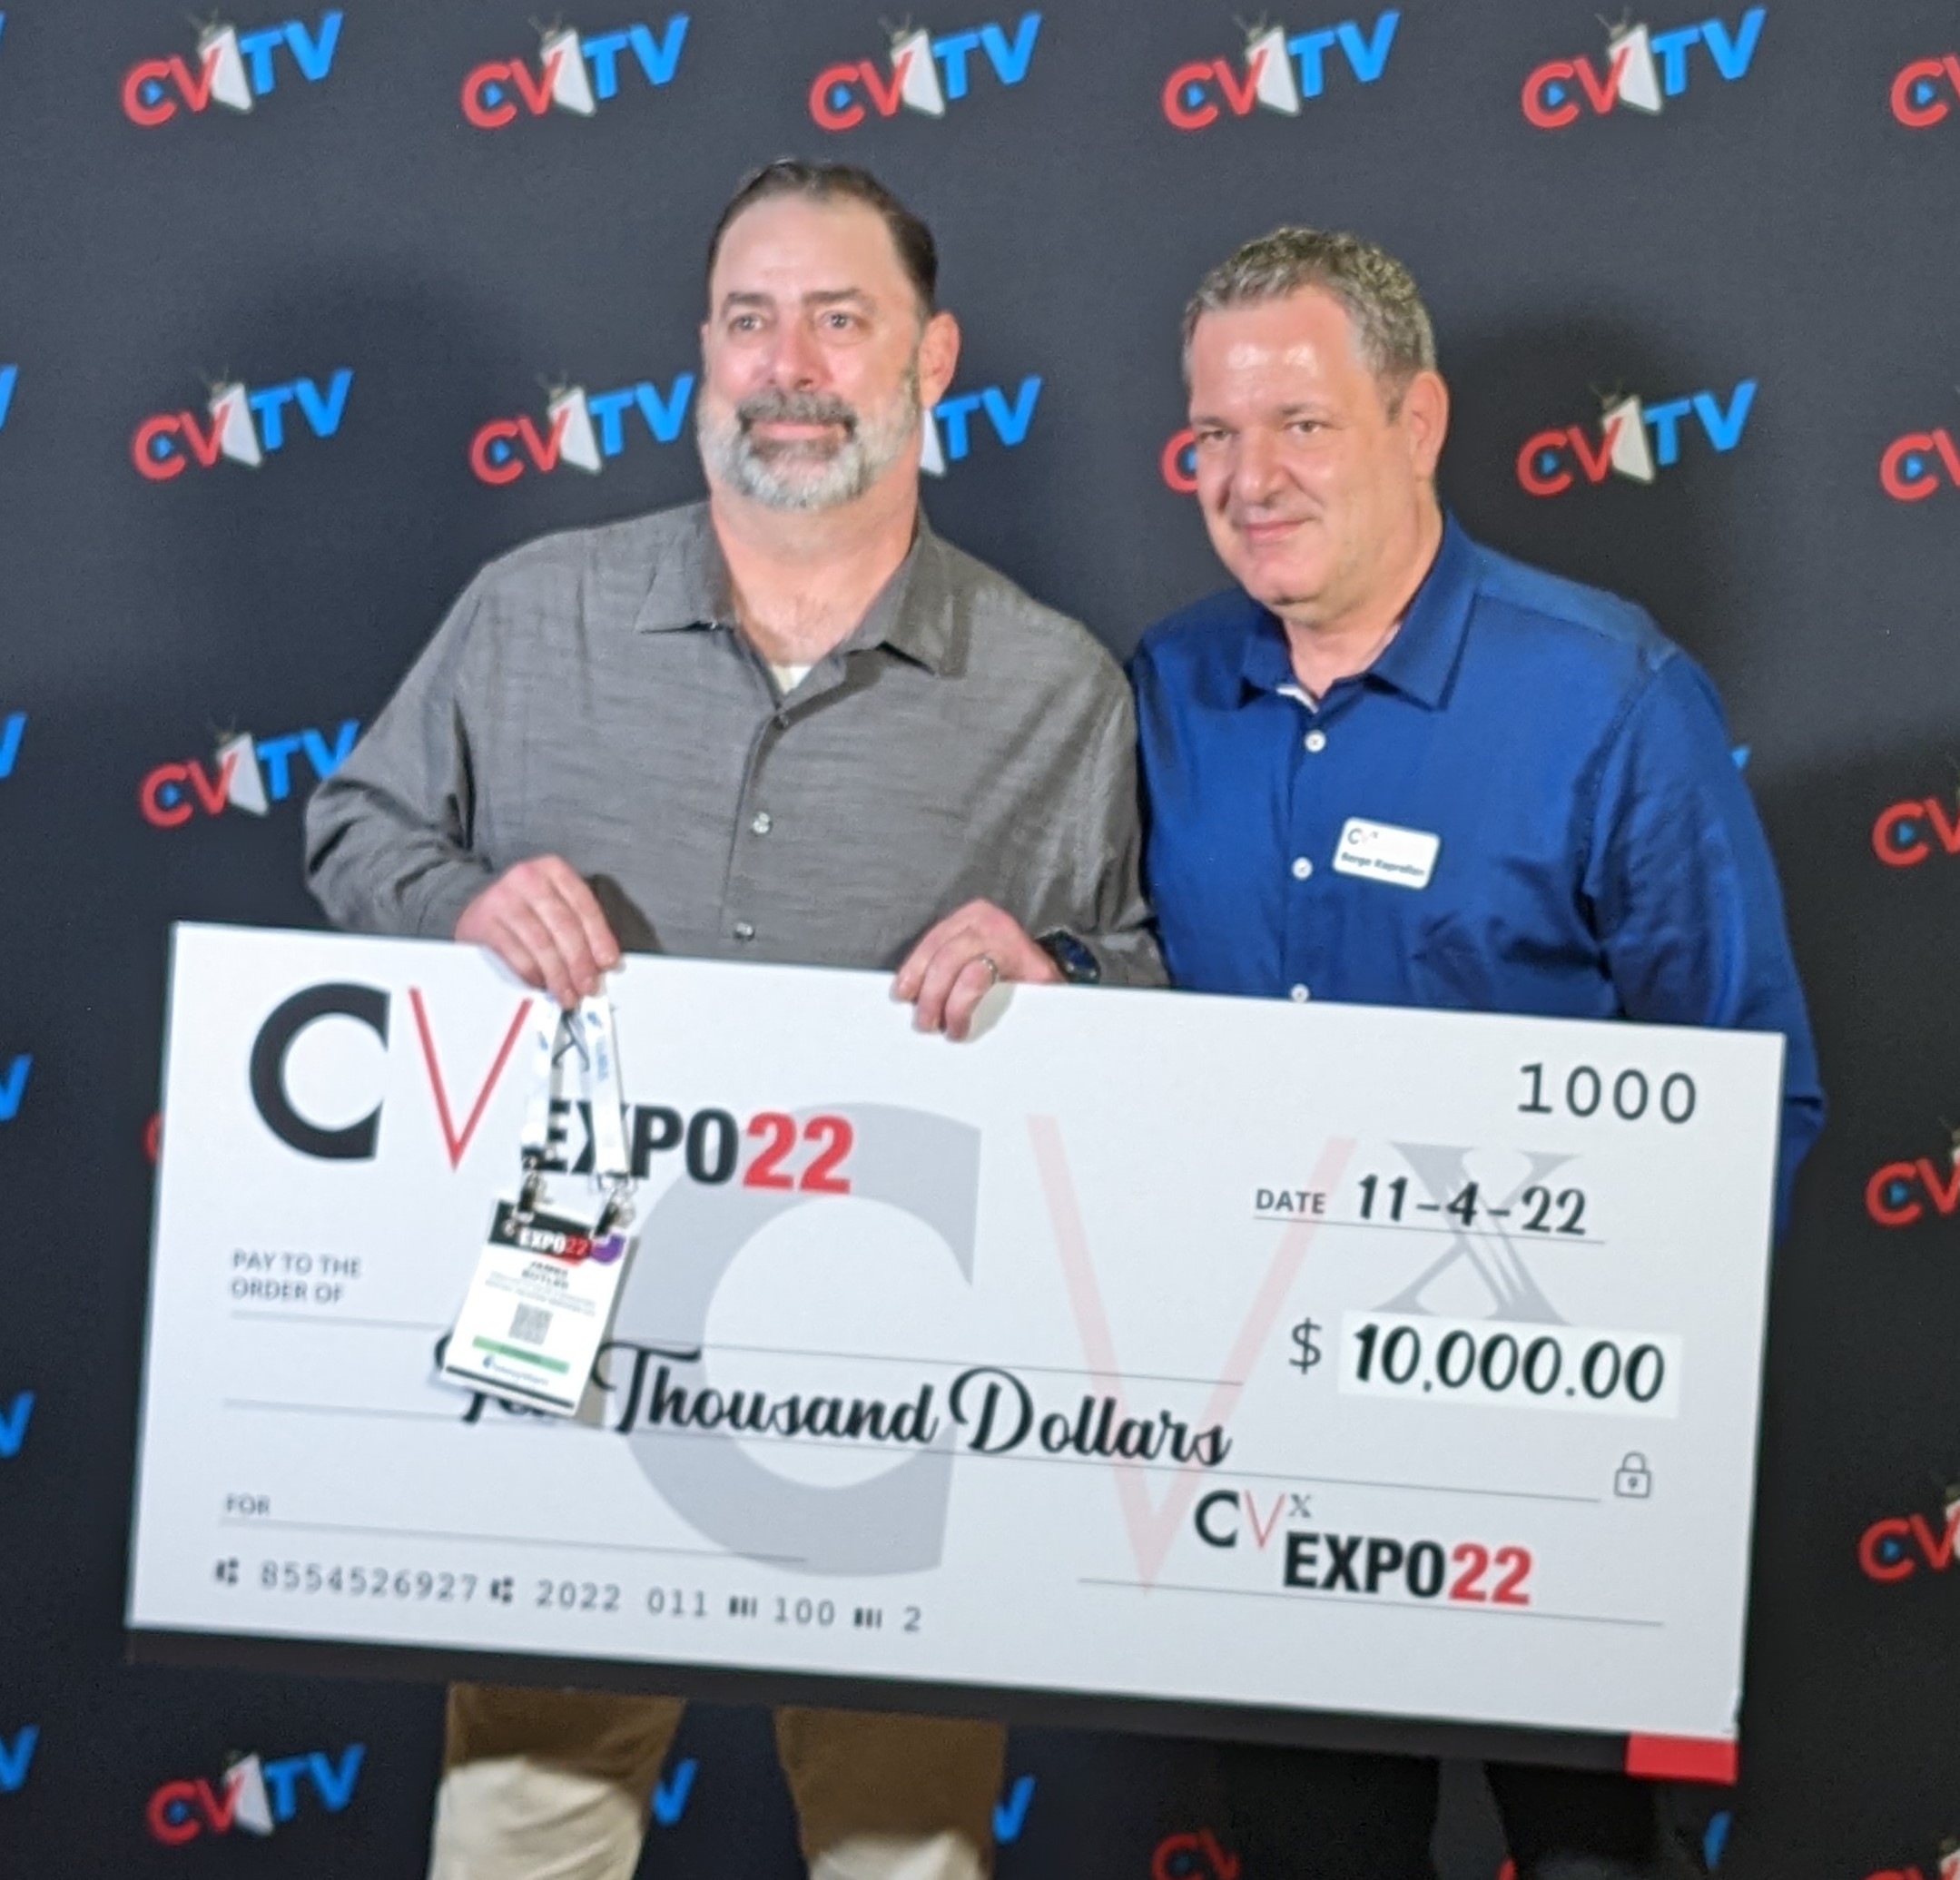 Easton Official Wins CVx $10,000 Prize; Telecom for Change Reaches Goal